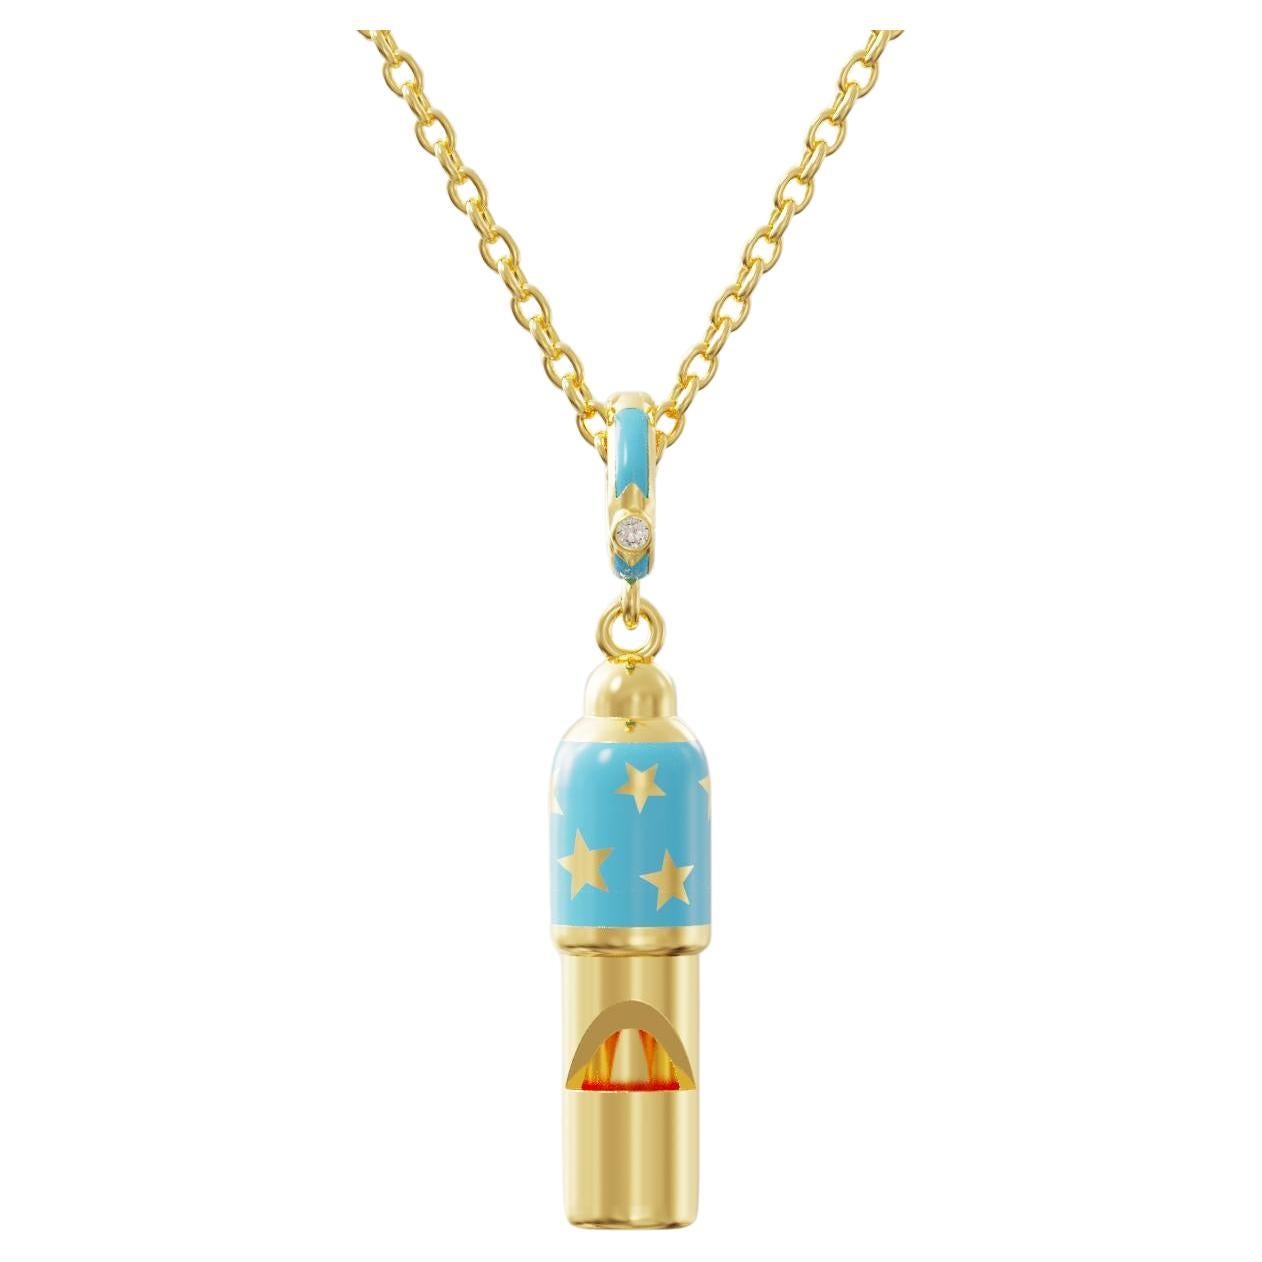 Small Gold Whistle Pendant Necklace, Blue Enamel